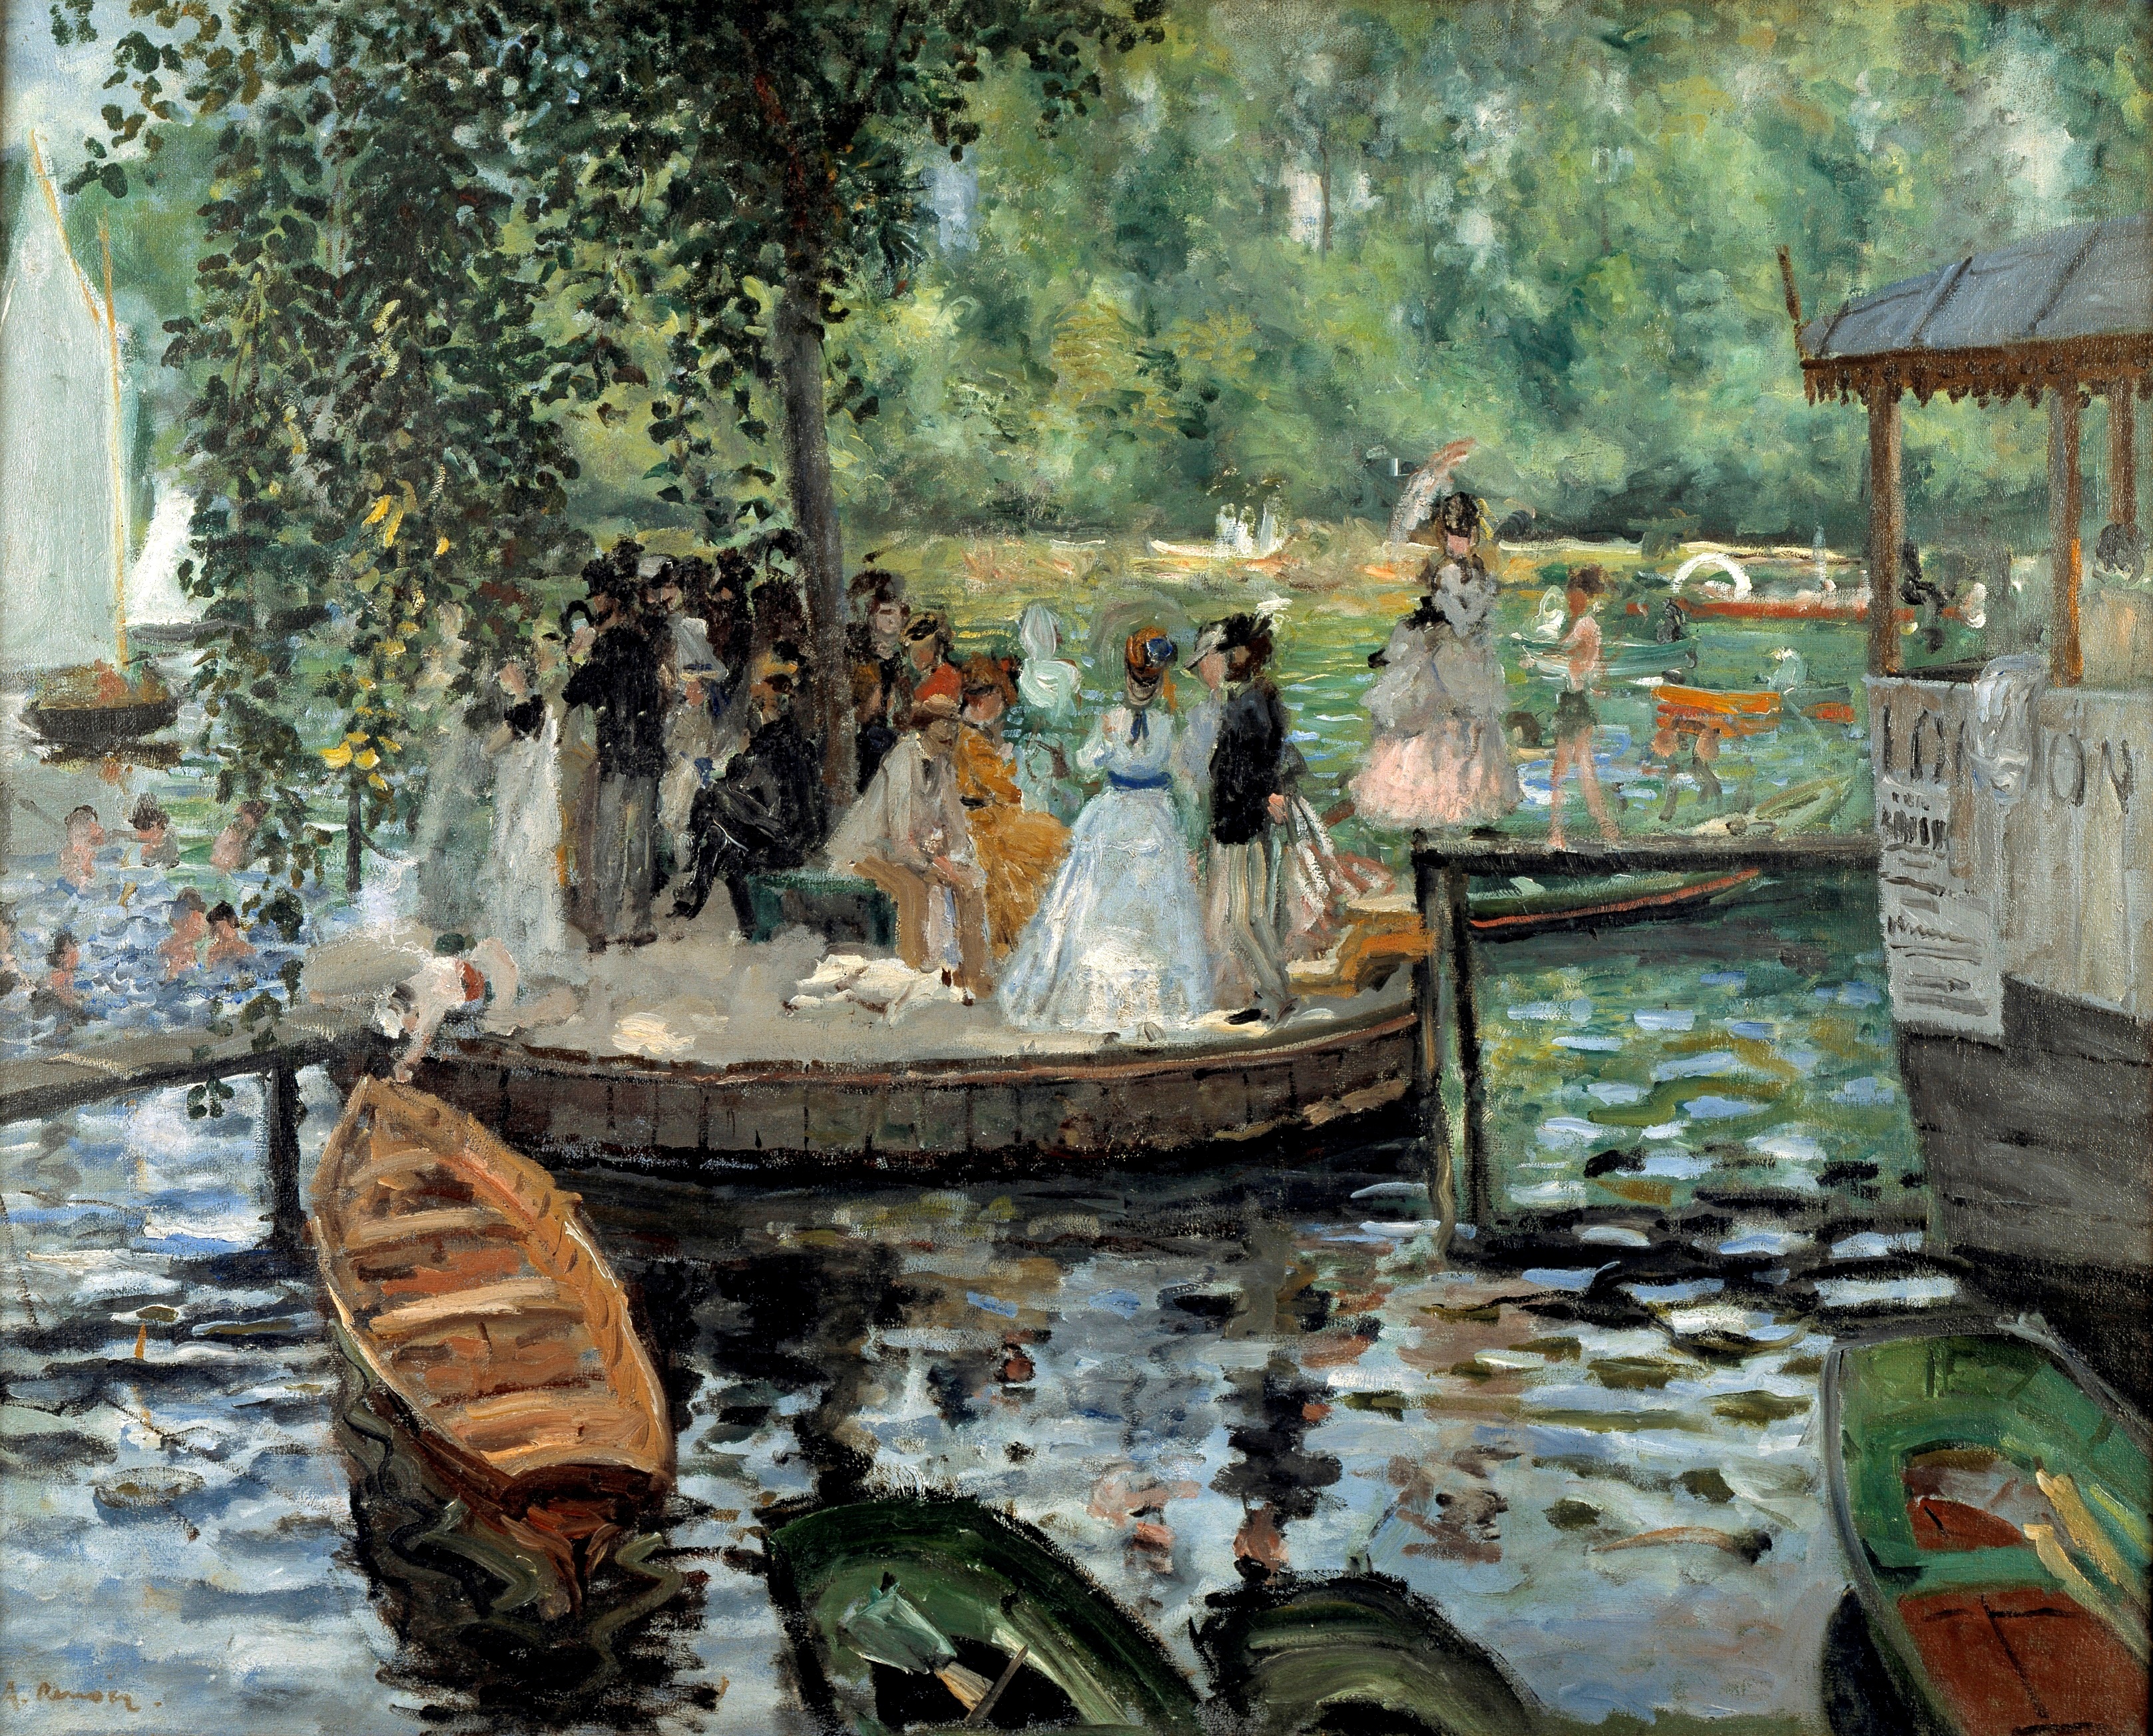 La Grenouillère by Pierre-Auguste Renoir - 1869 - 81.1 x 66.5 cm 